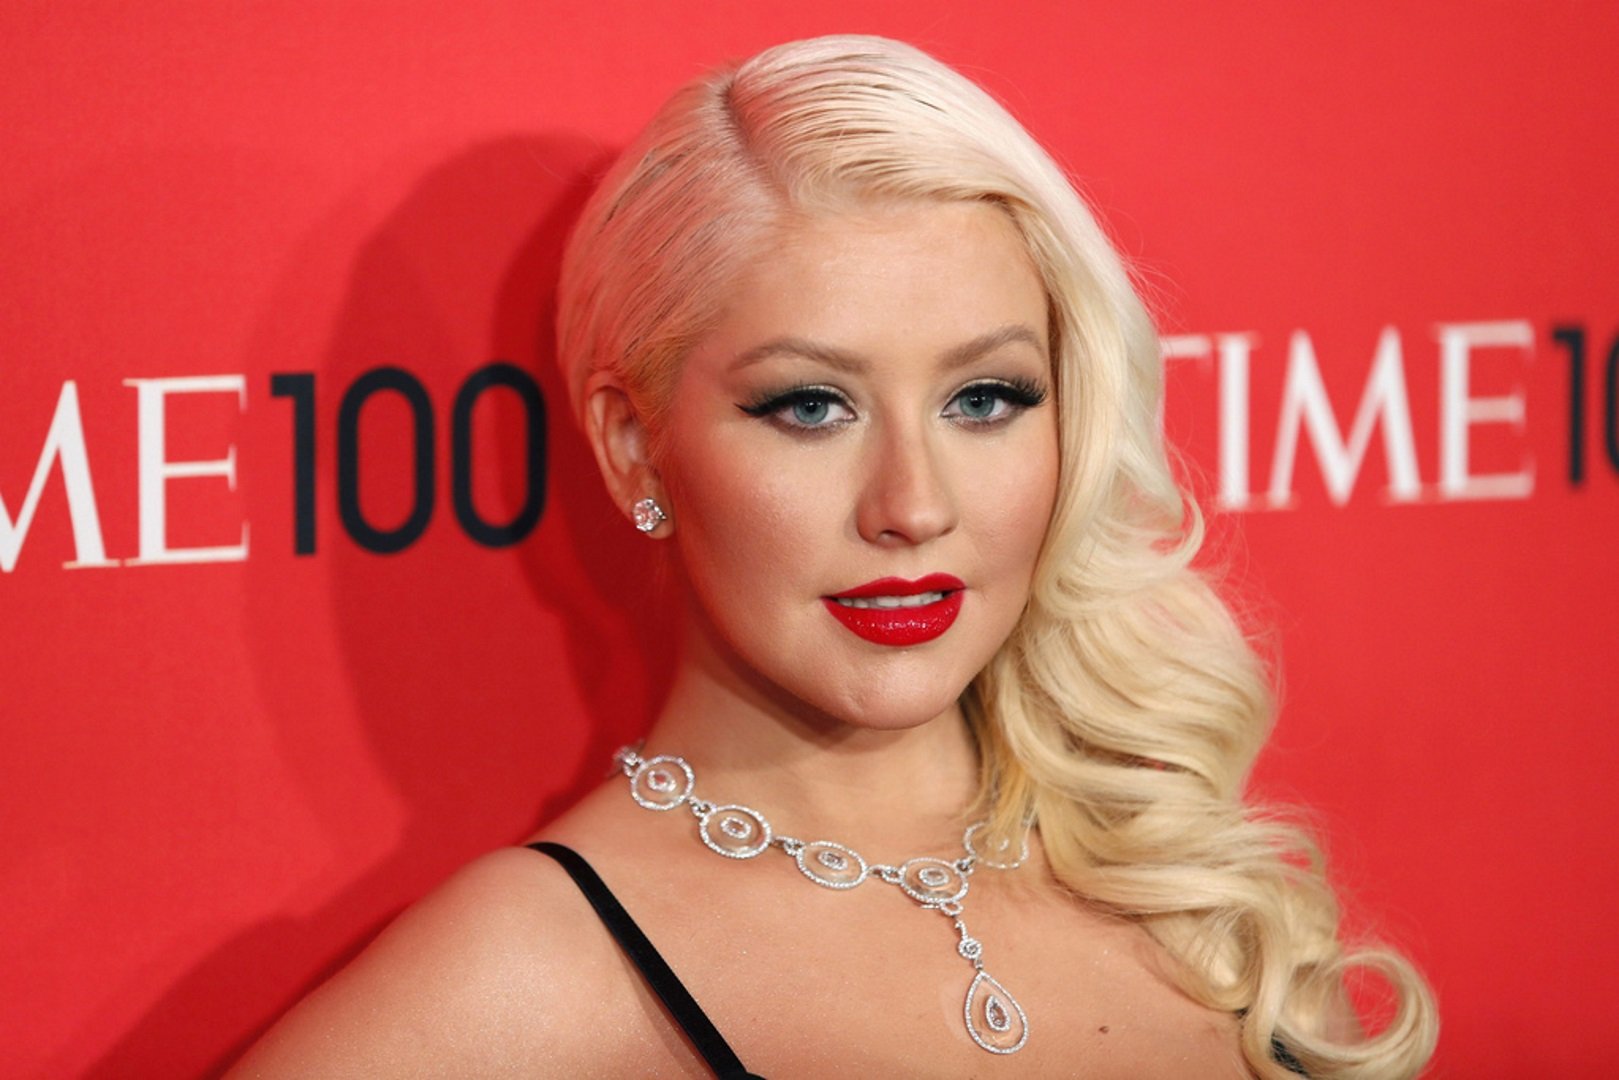 La fortuna que posee Christina Aguilera y que le hizo pensarse la retirada